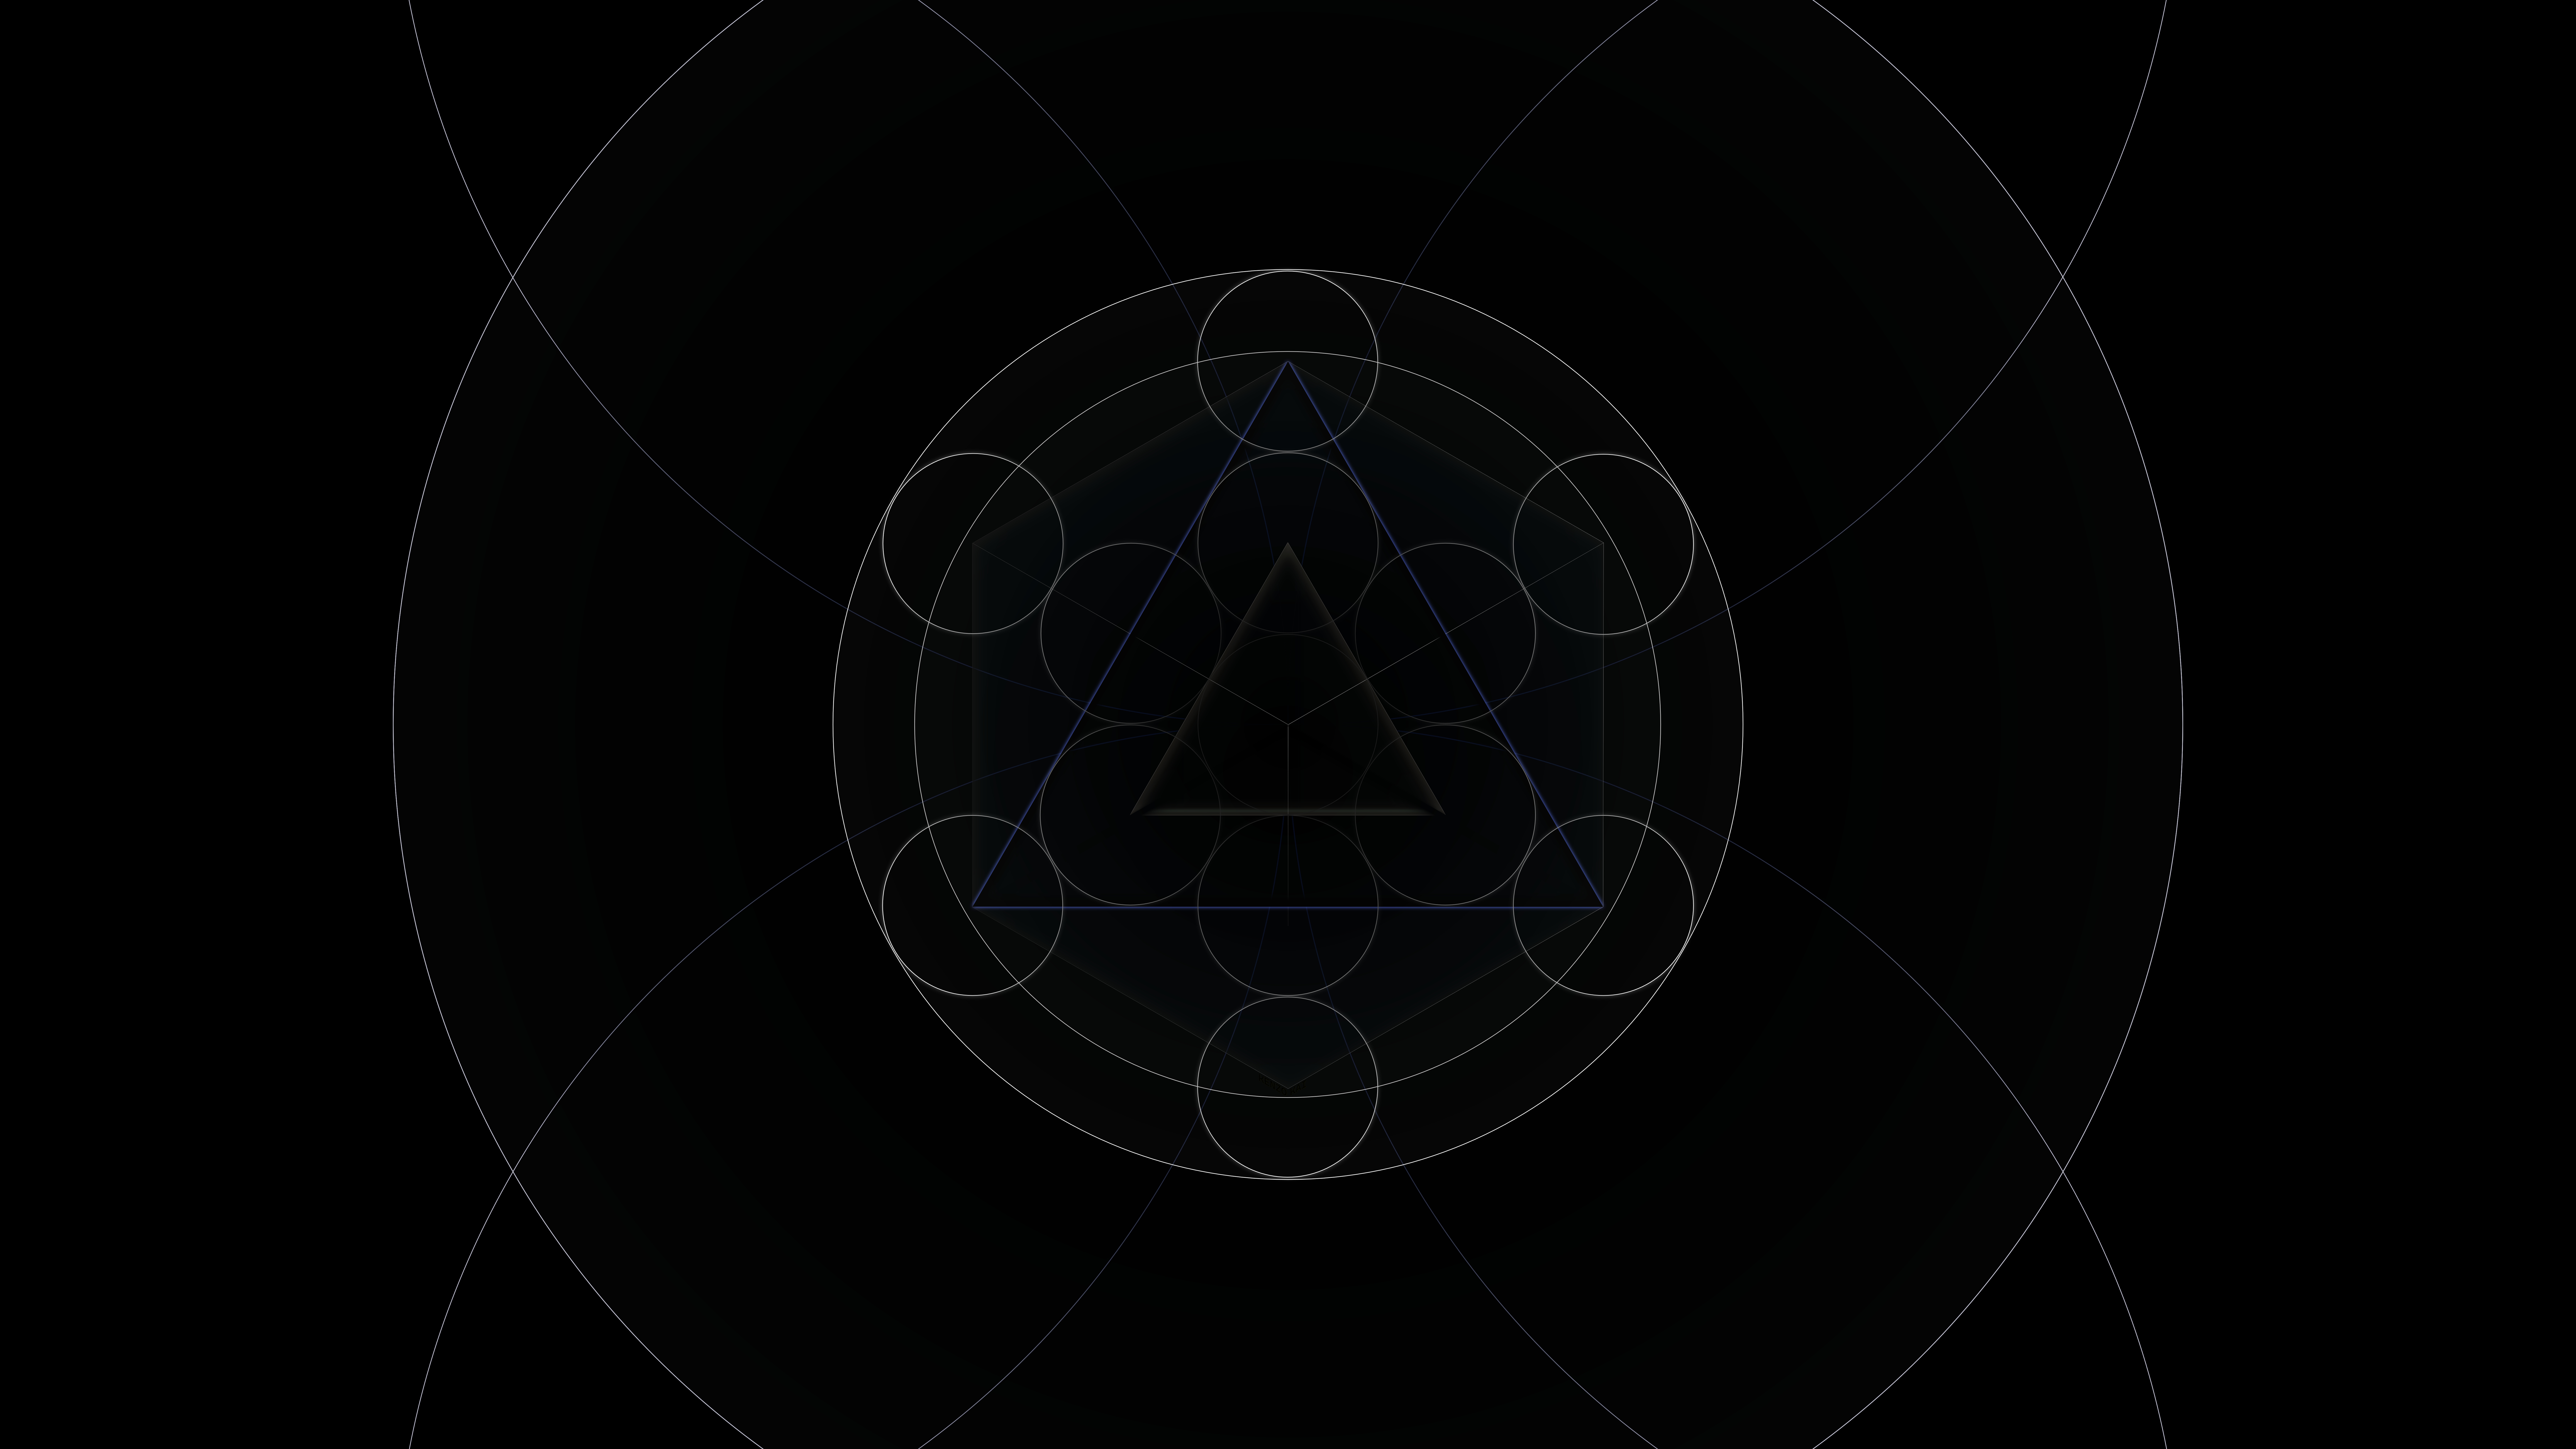 General 11520x6480 geometric figures geometry sacred geometry line art dark background minimalism